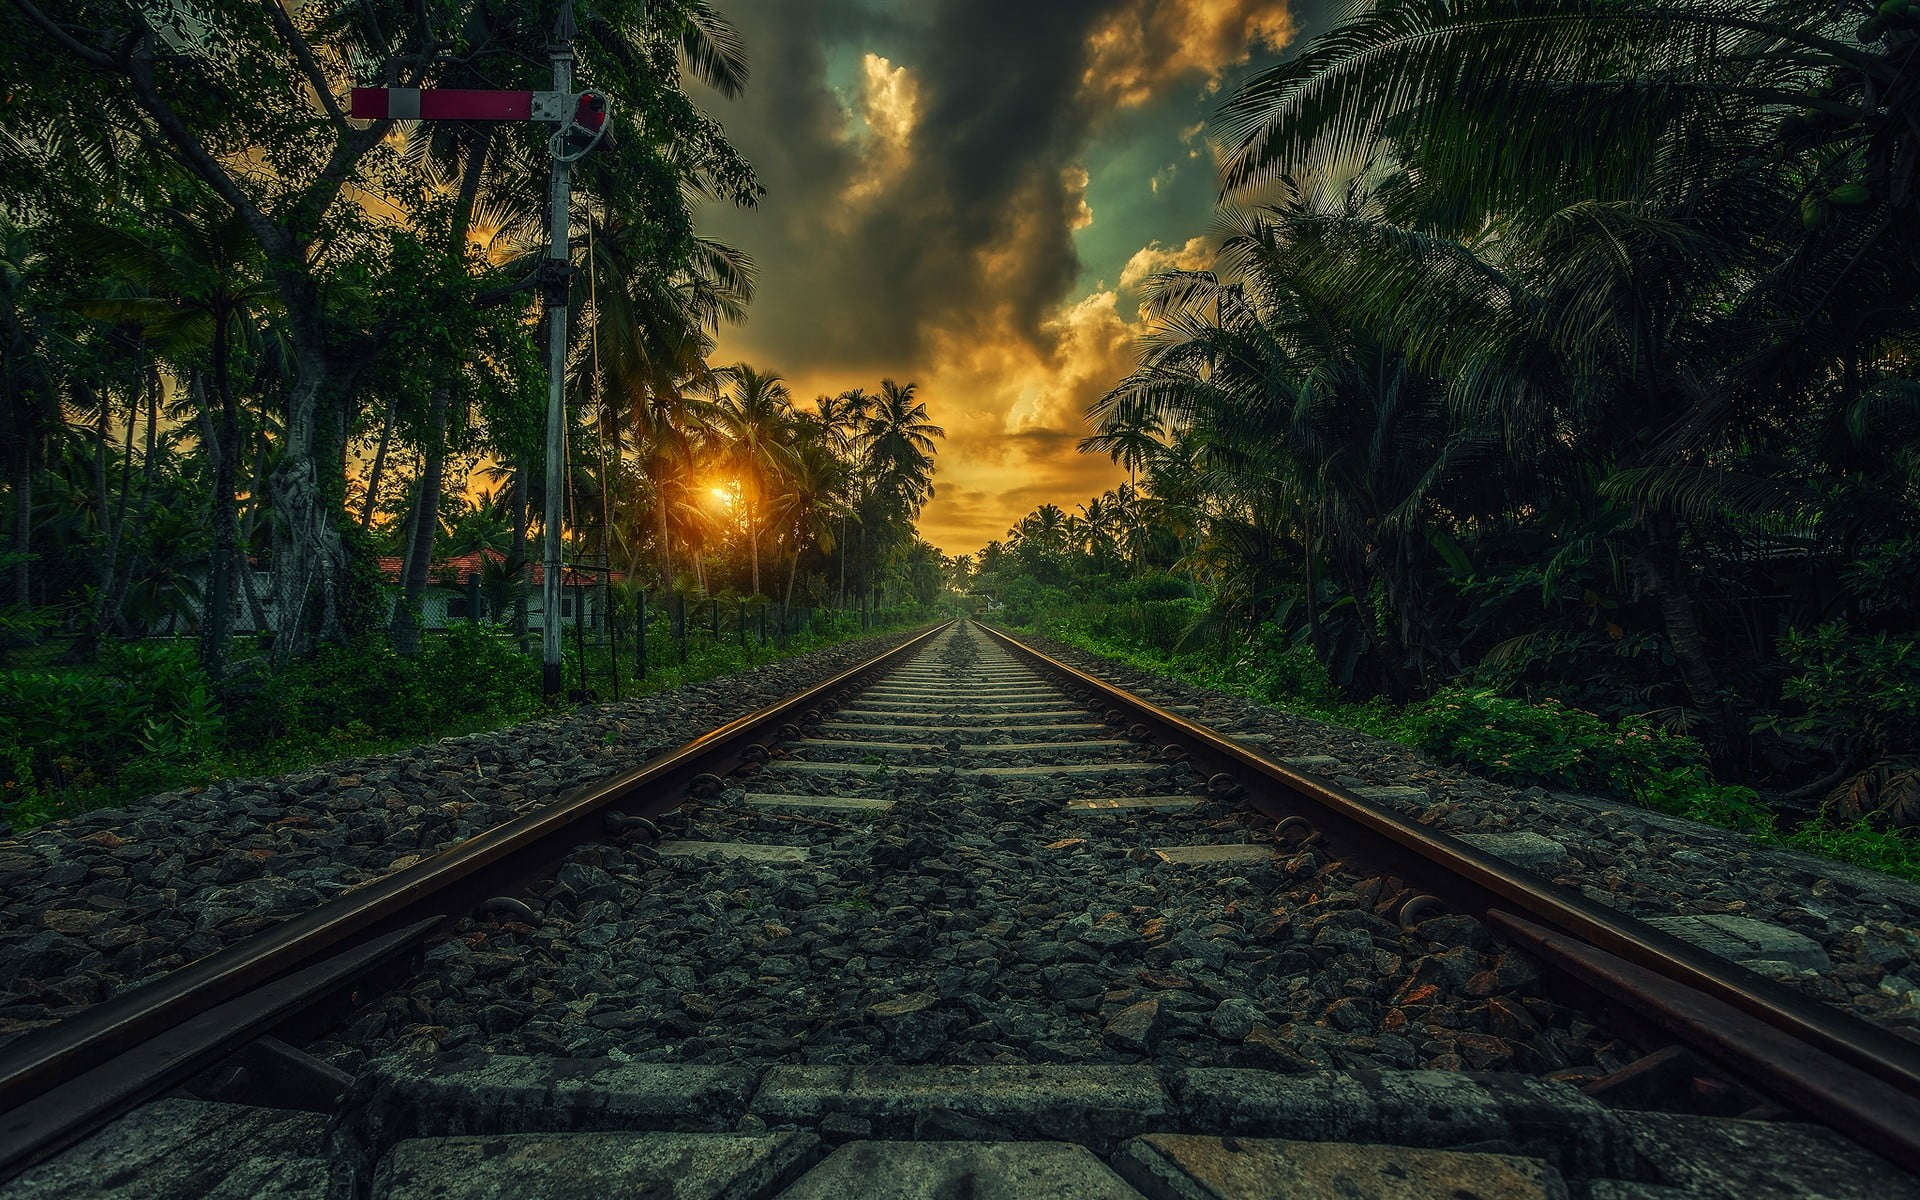 Train railway wallpaper, nature, landscape, sunset, palm trees wallpaper